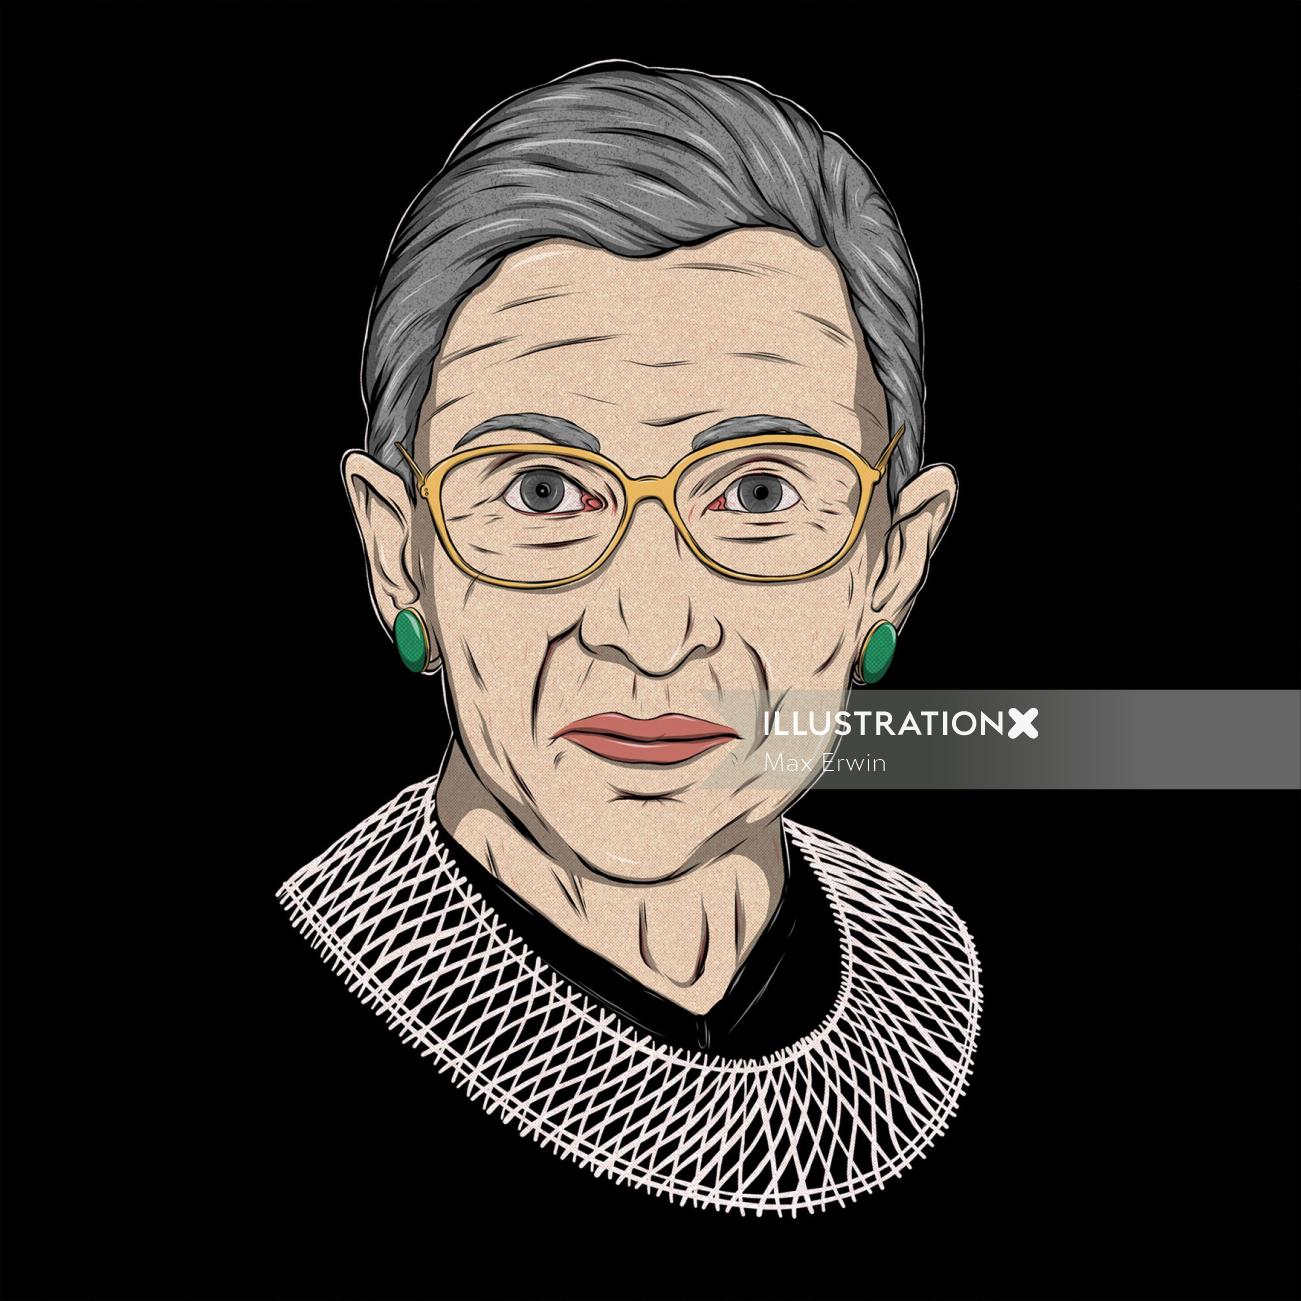 A depiction of Ruth Bader Ginsburg